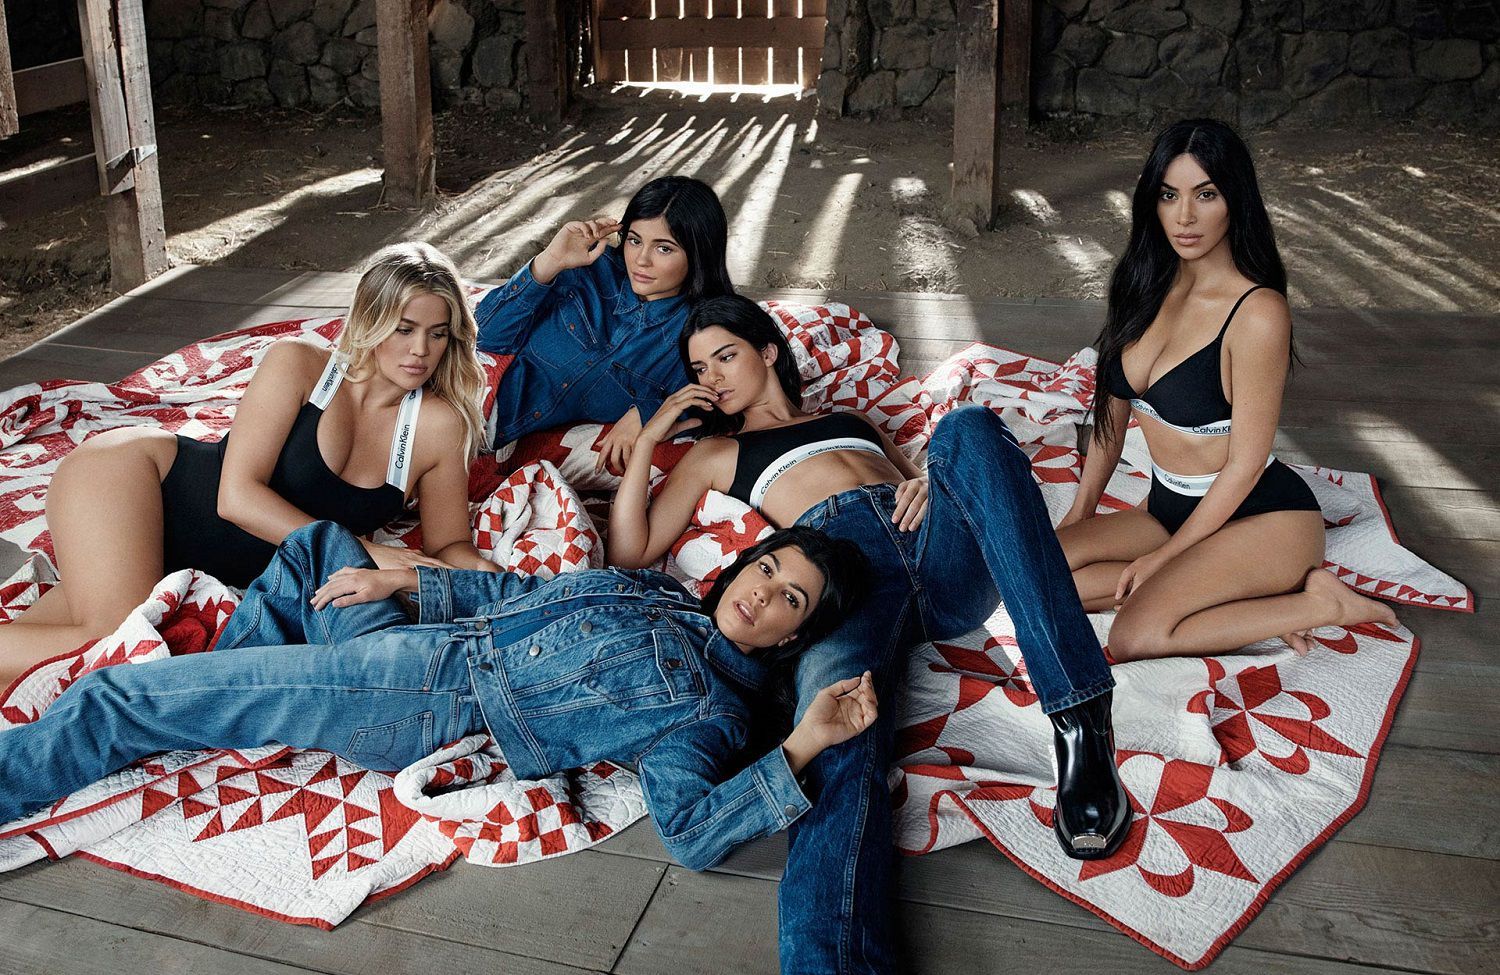 A$AP Mob For Calvin Klein #MYCALVINS Ad Campaign